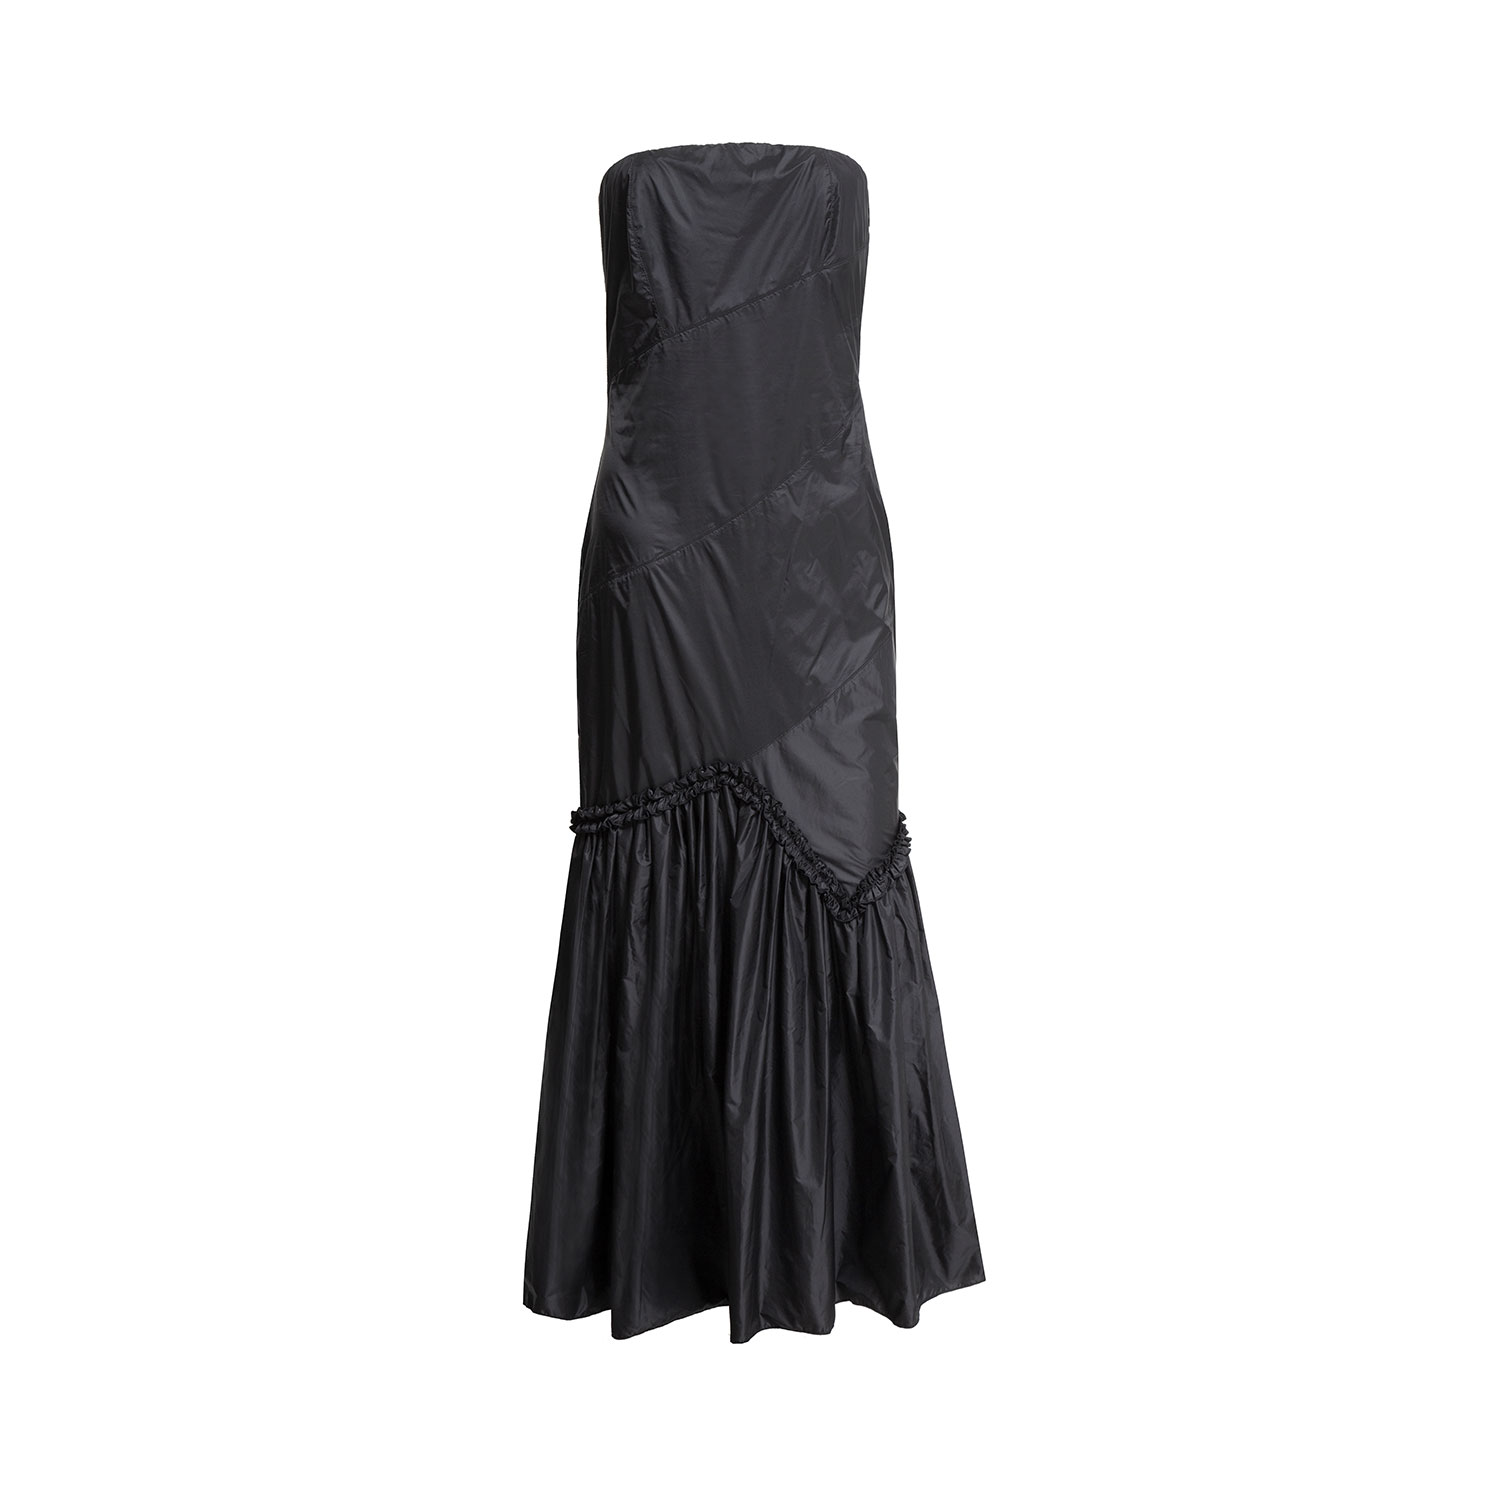 Women’s Black Spades 2 Strapless Dress Large Audrey Vallens